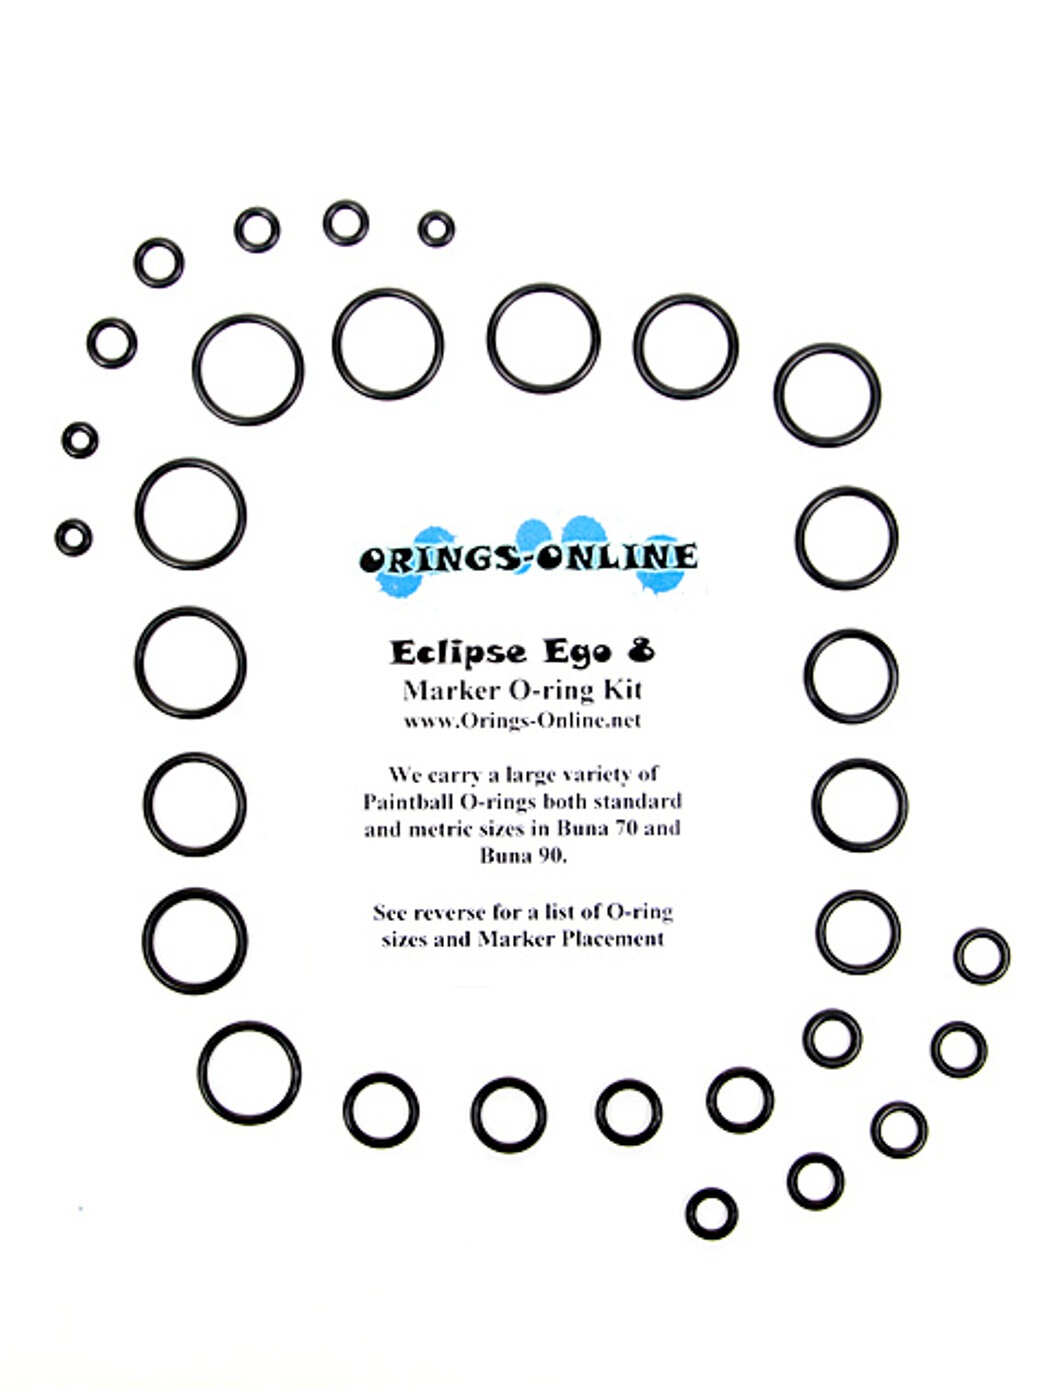 Planet Eclipse Ego 8 Marker O-ring Kit